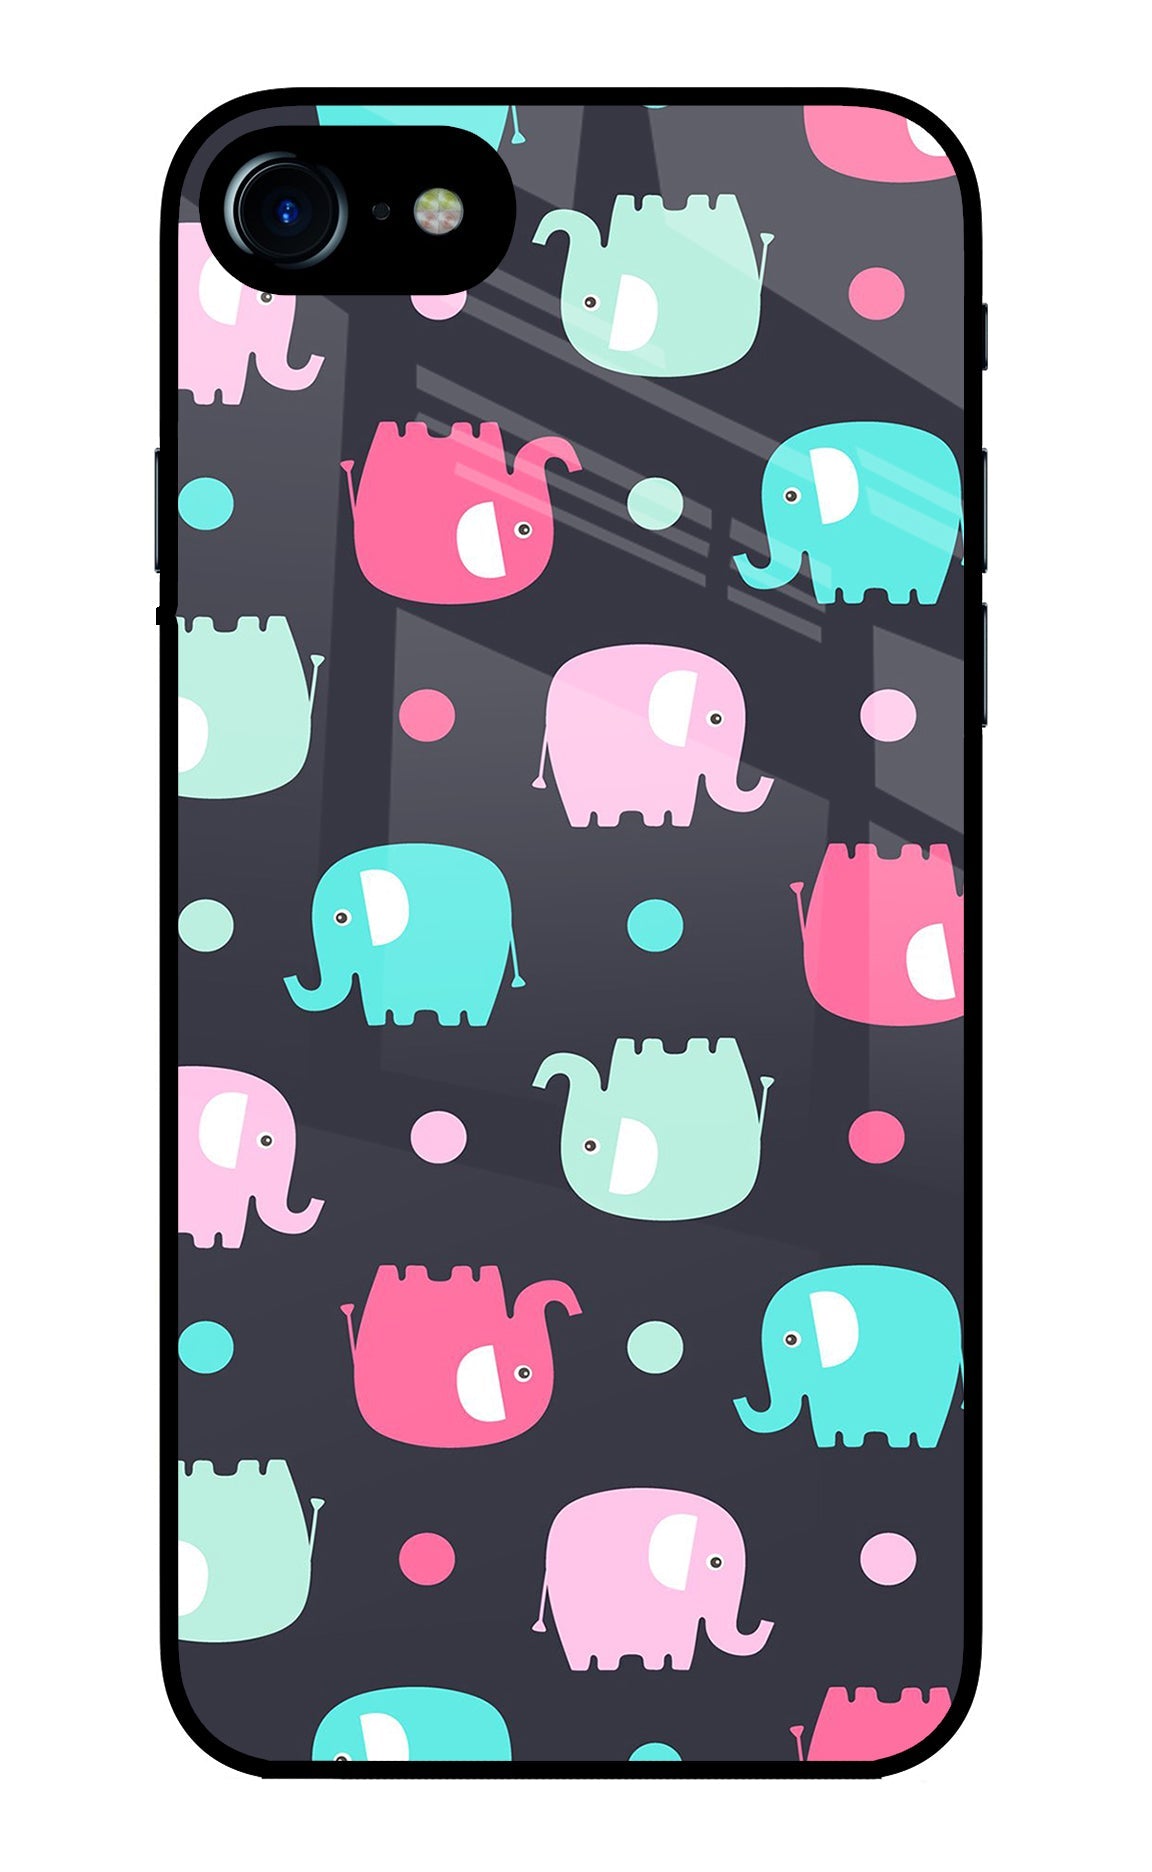 Elephants iPhone 7/7s Glass Case